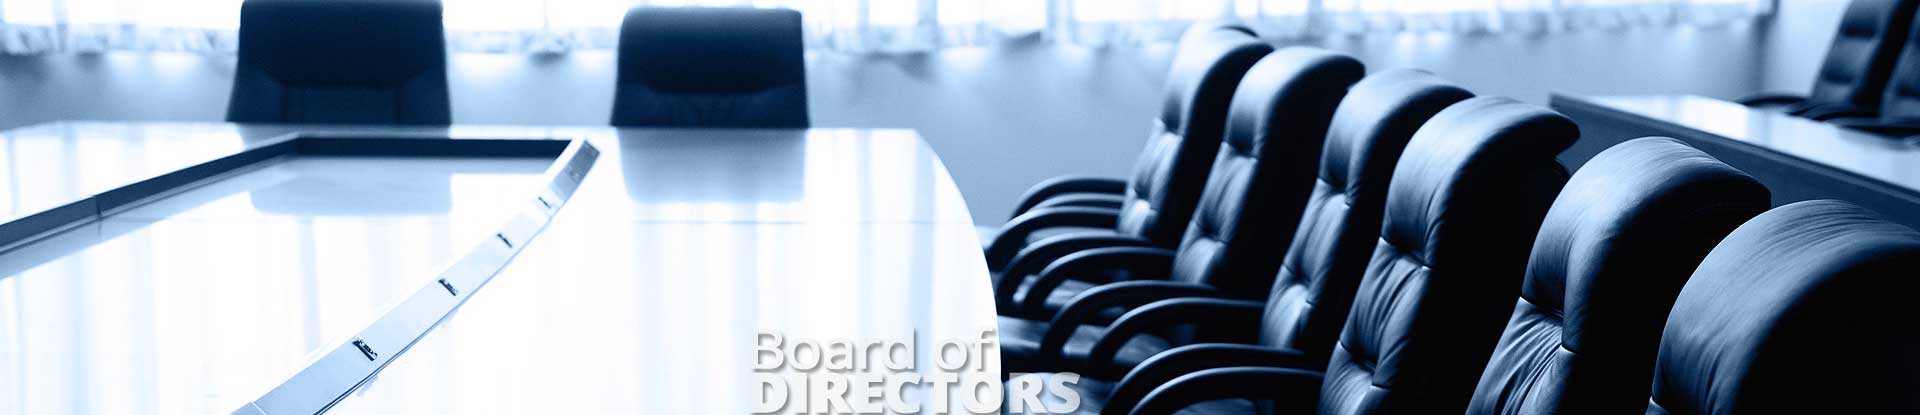 Board of Directors | Captain Polyplast Ltd.